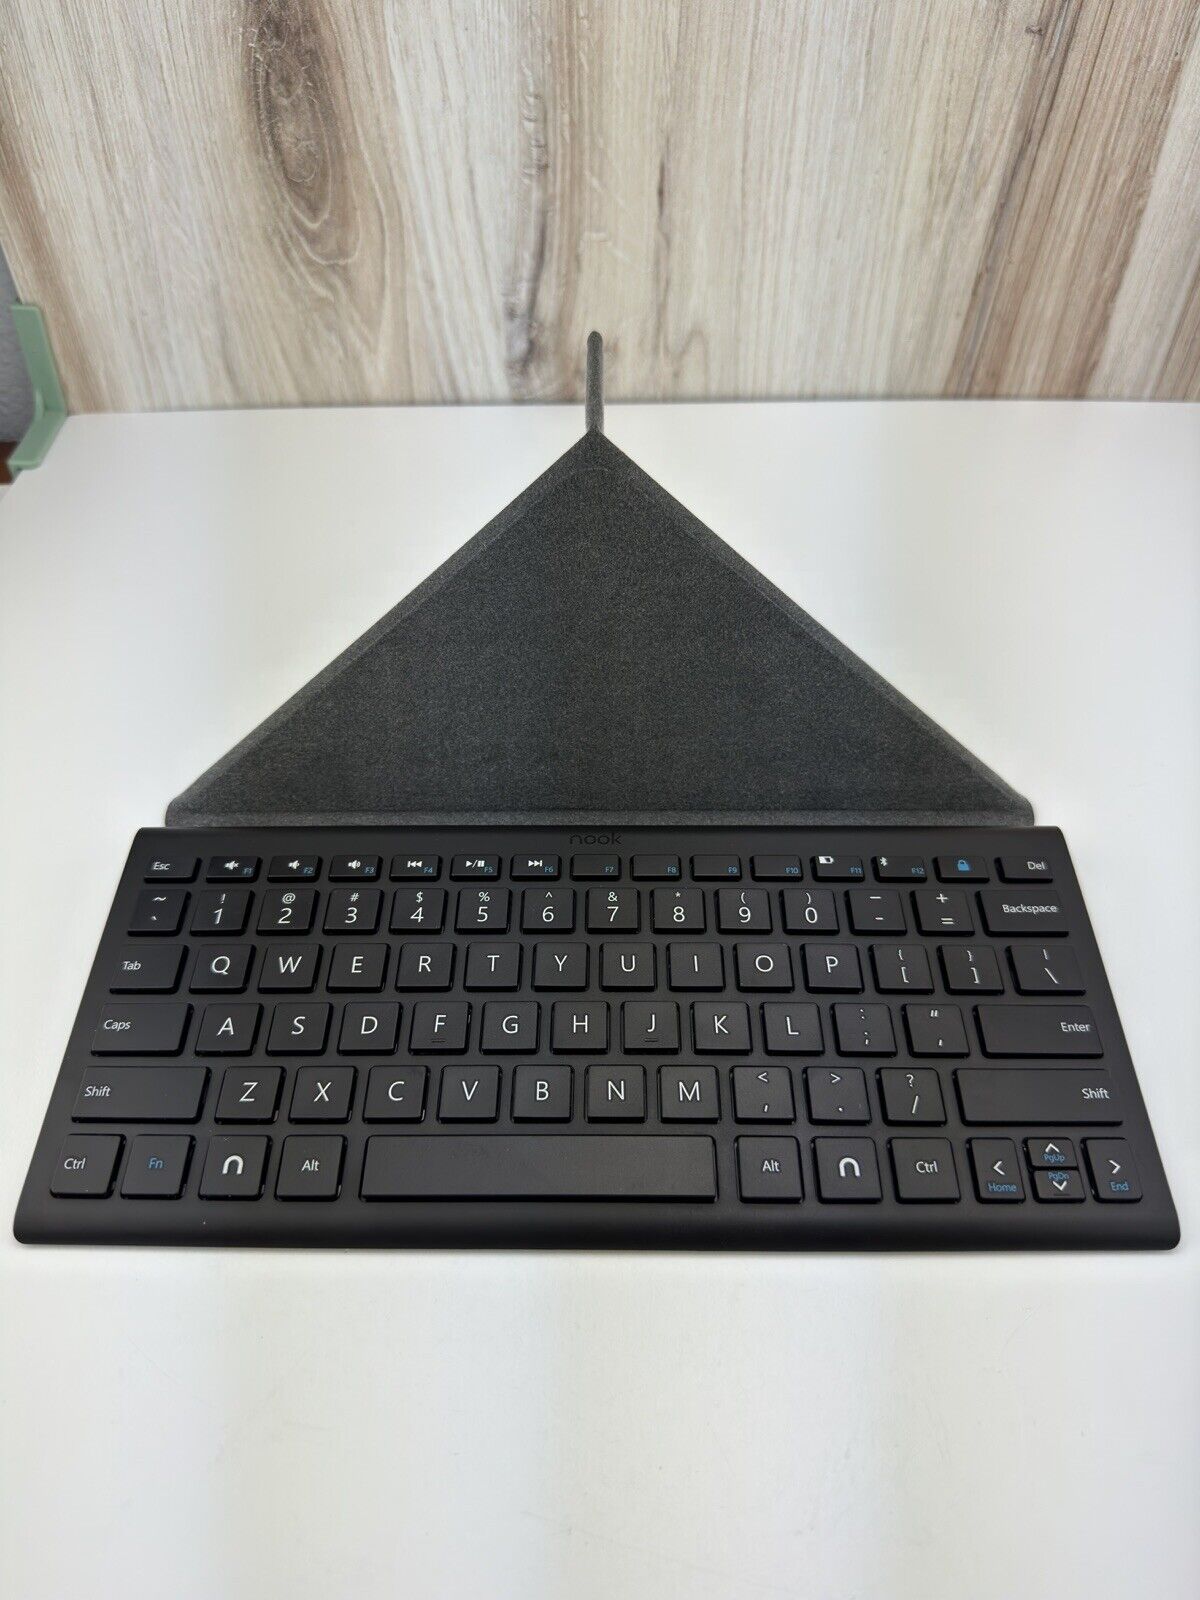 Nook Bluetooth Keyboard Black Folding KT-1155 Tested Working NICE